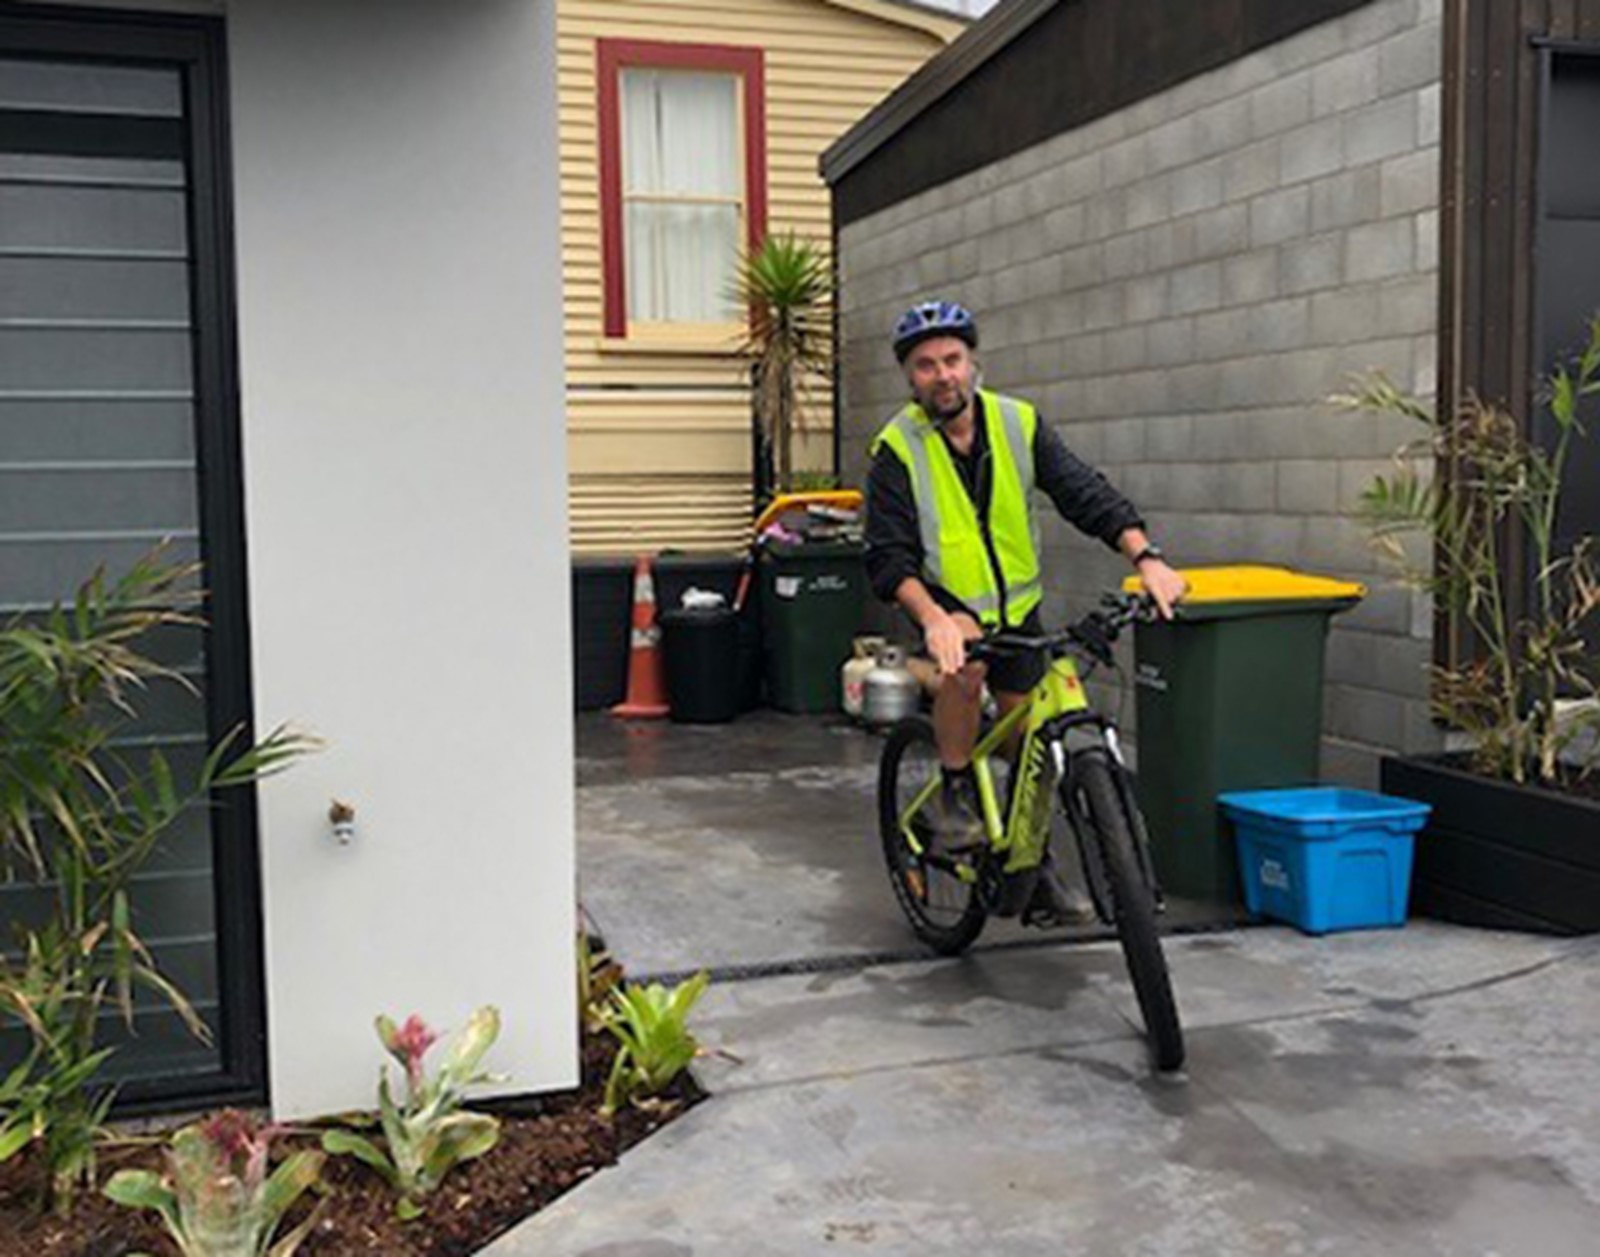 Man leaving the house on a bike